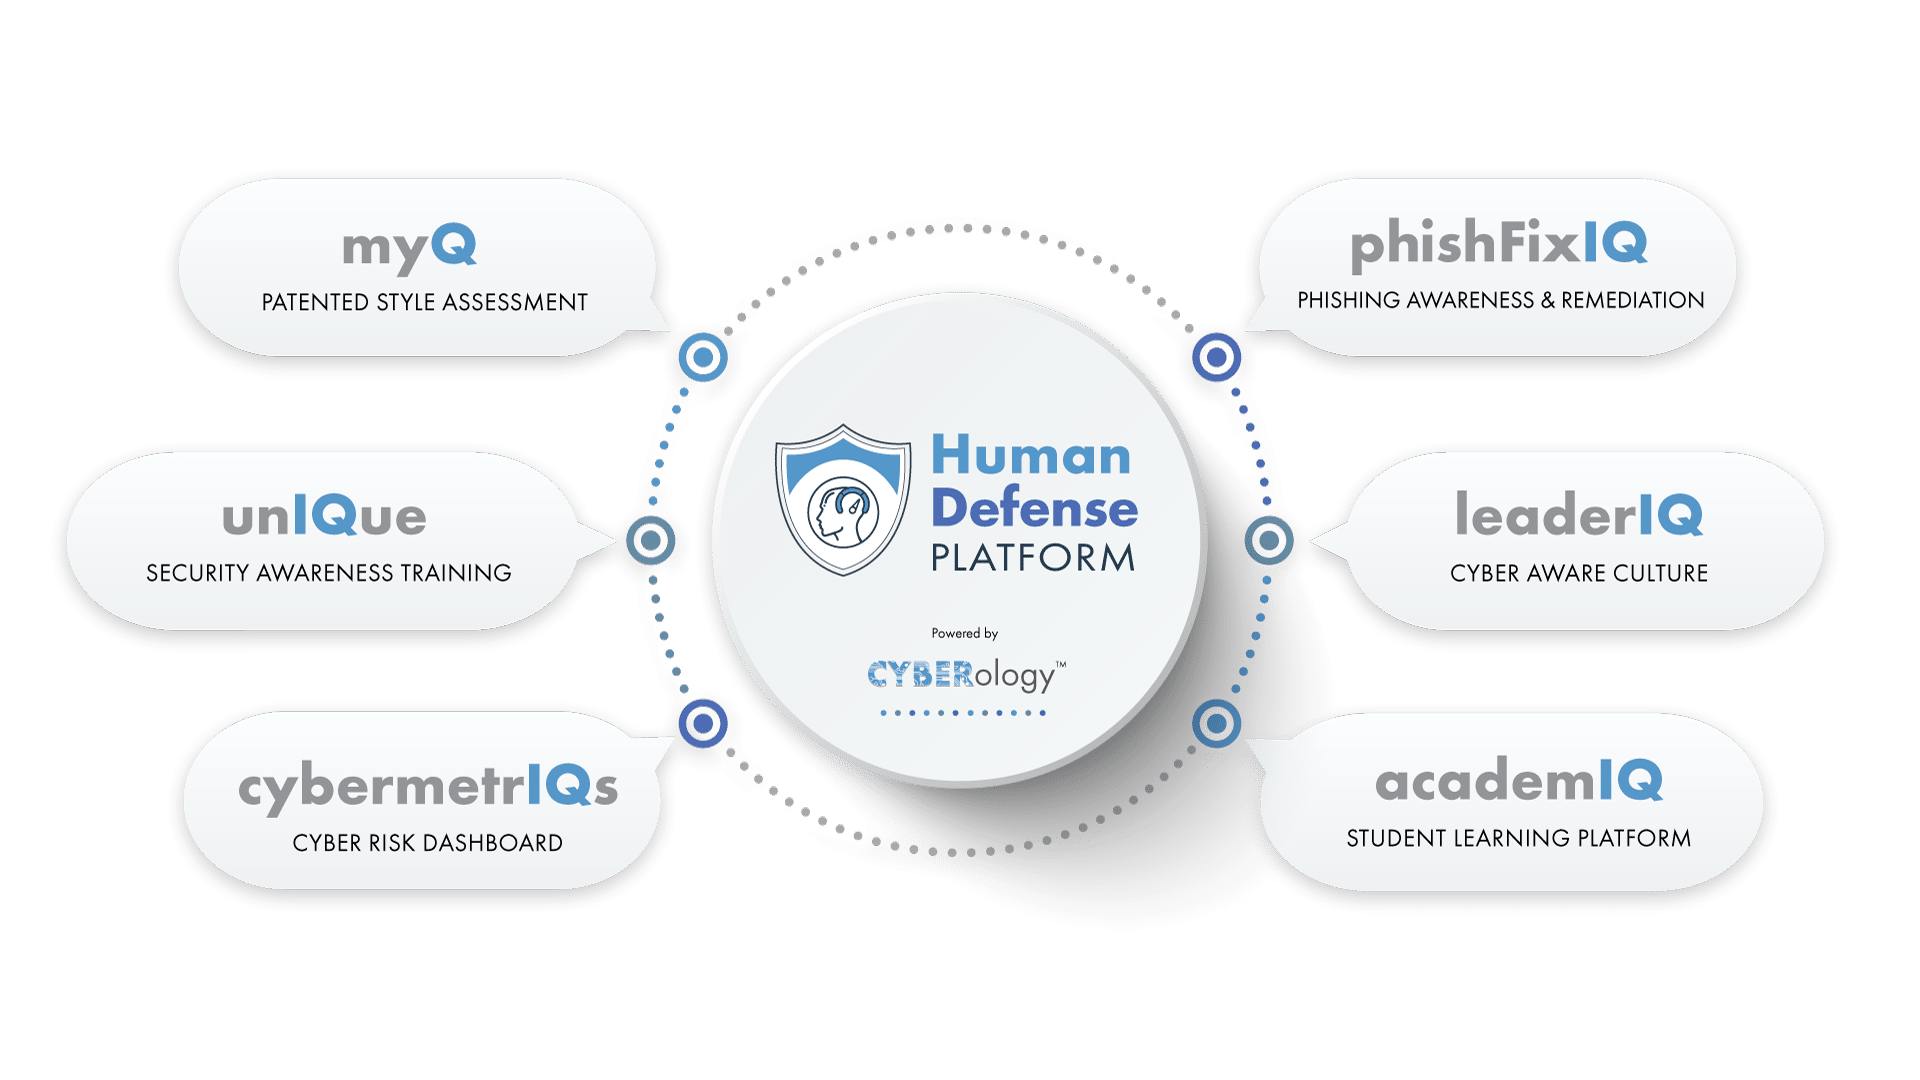 cyberconIQ--Human Defense Platform powered by CYBERology